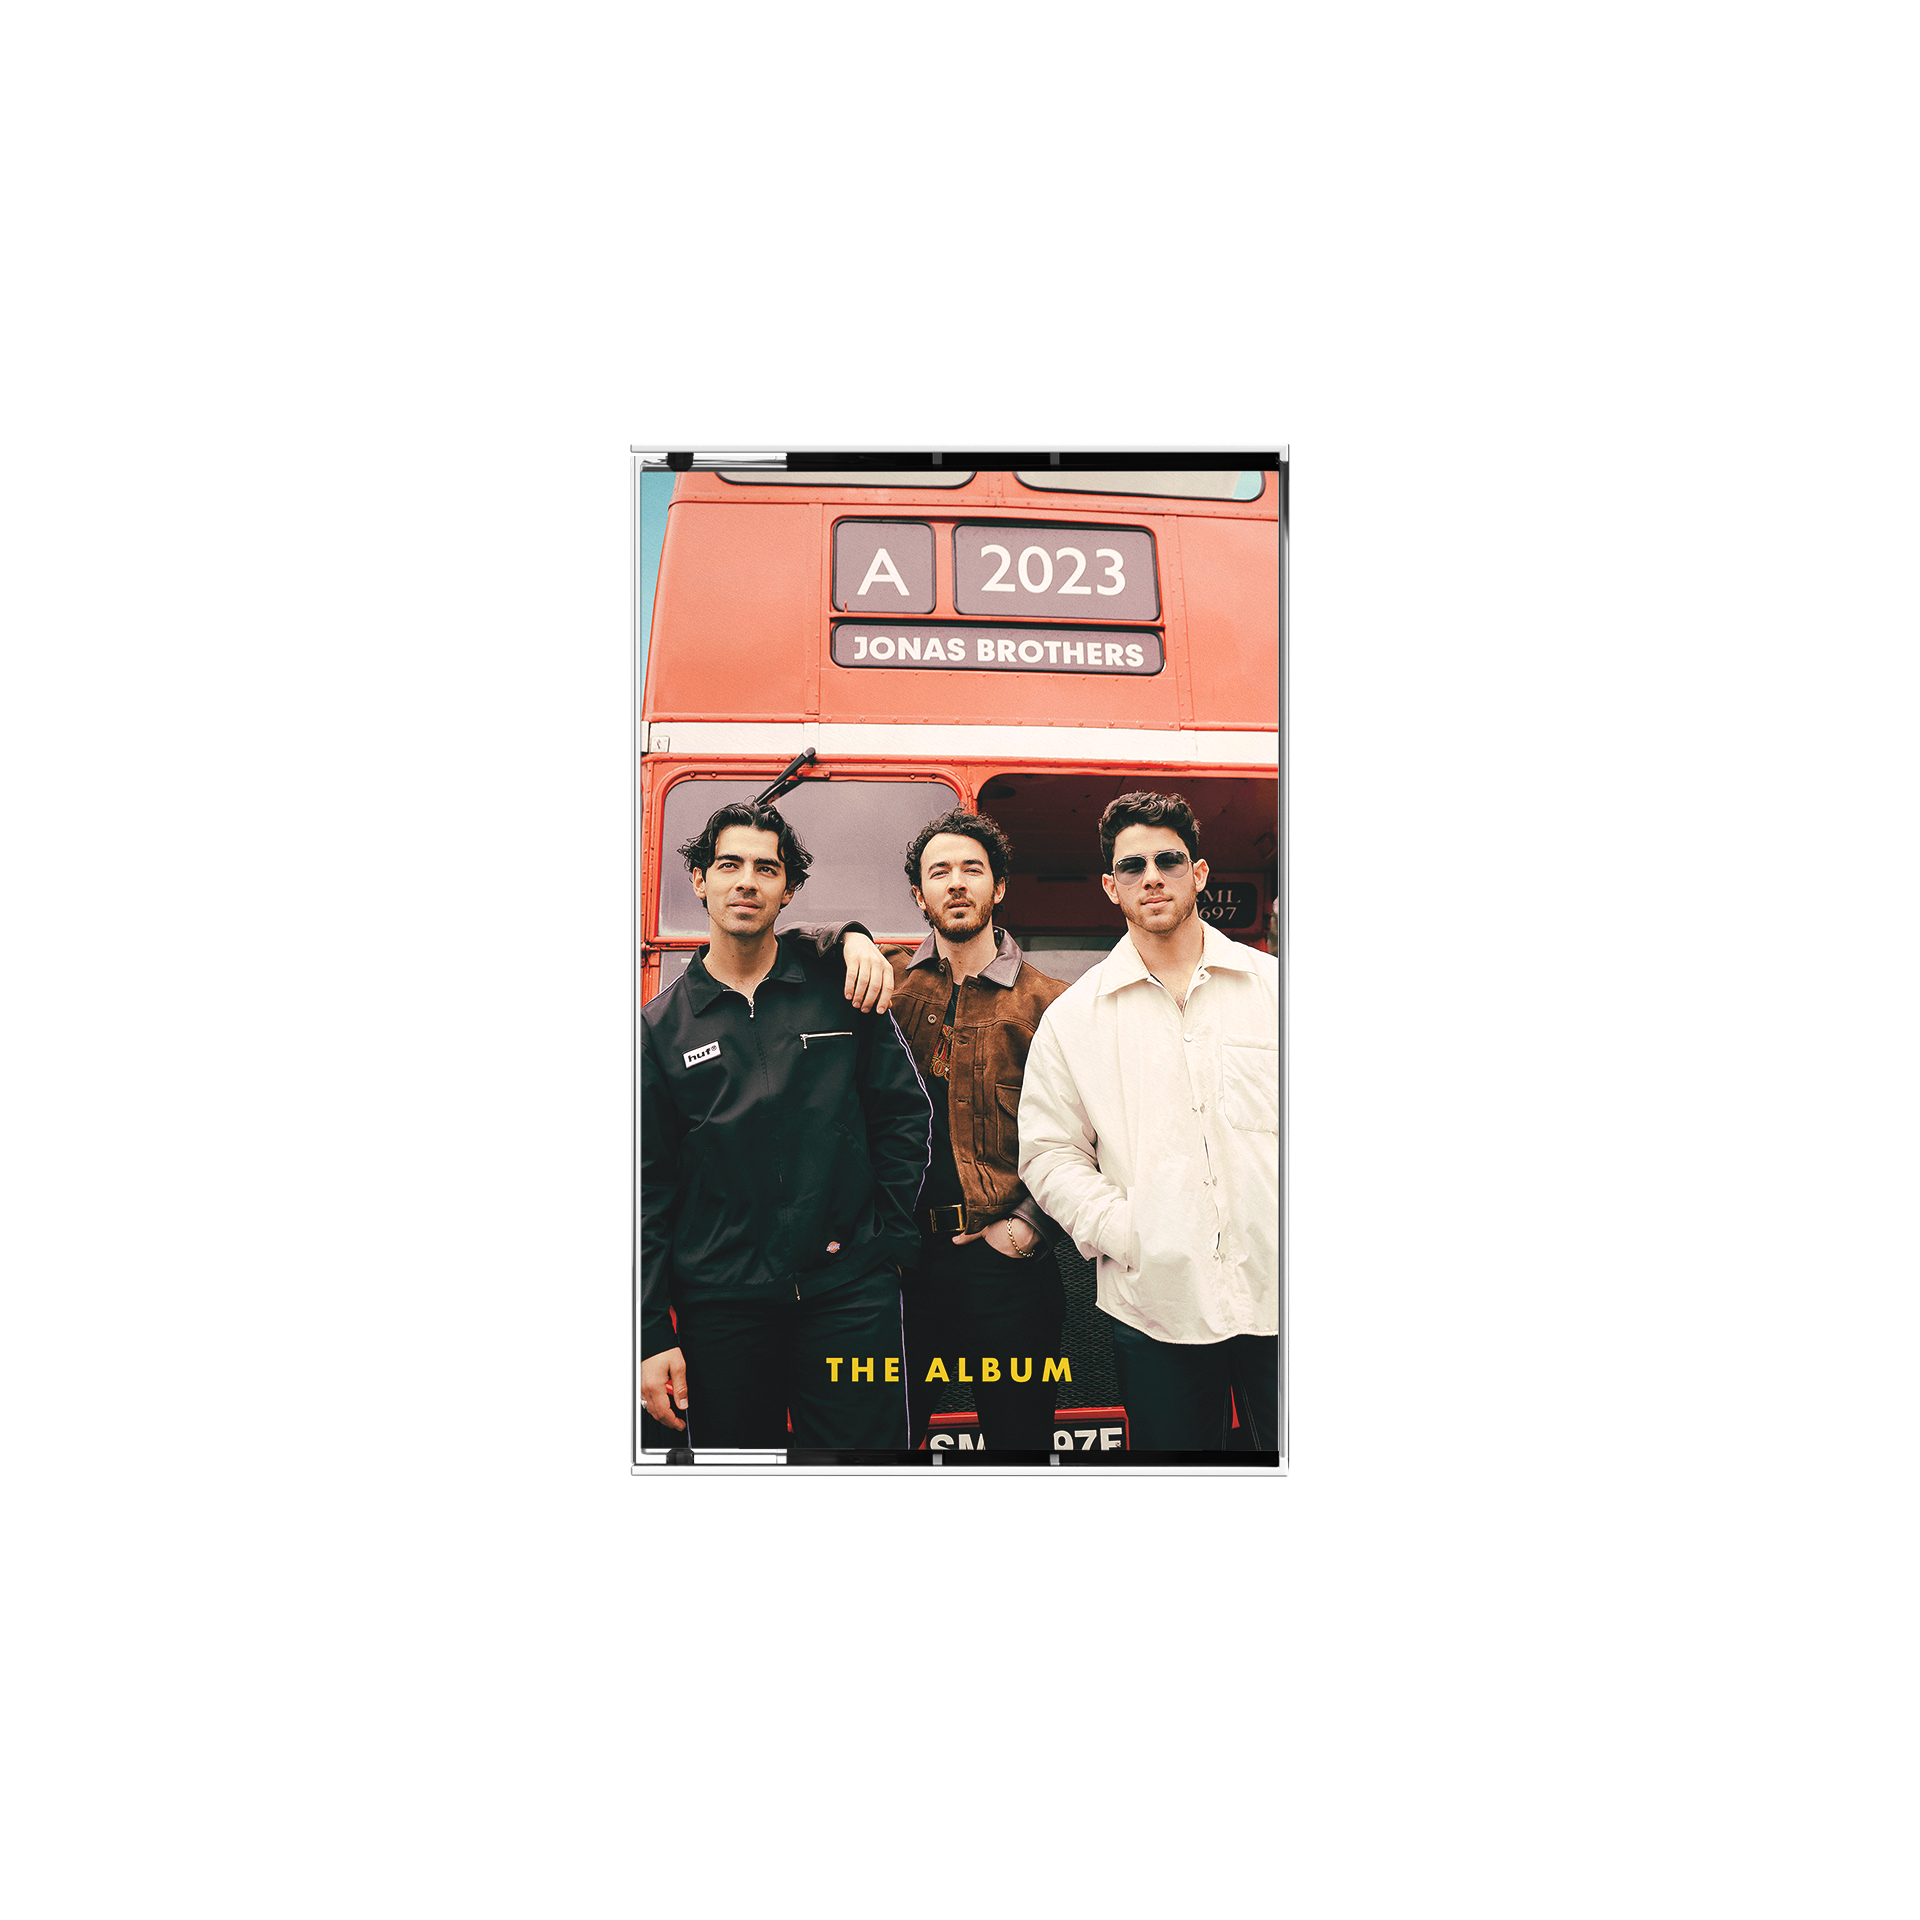 Jonas Brothers - The Album UK Cassette